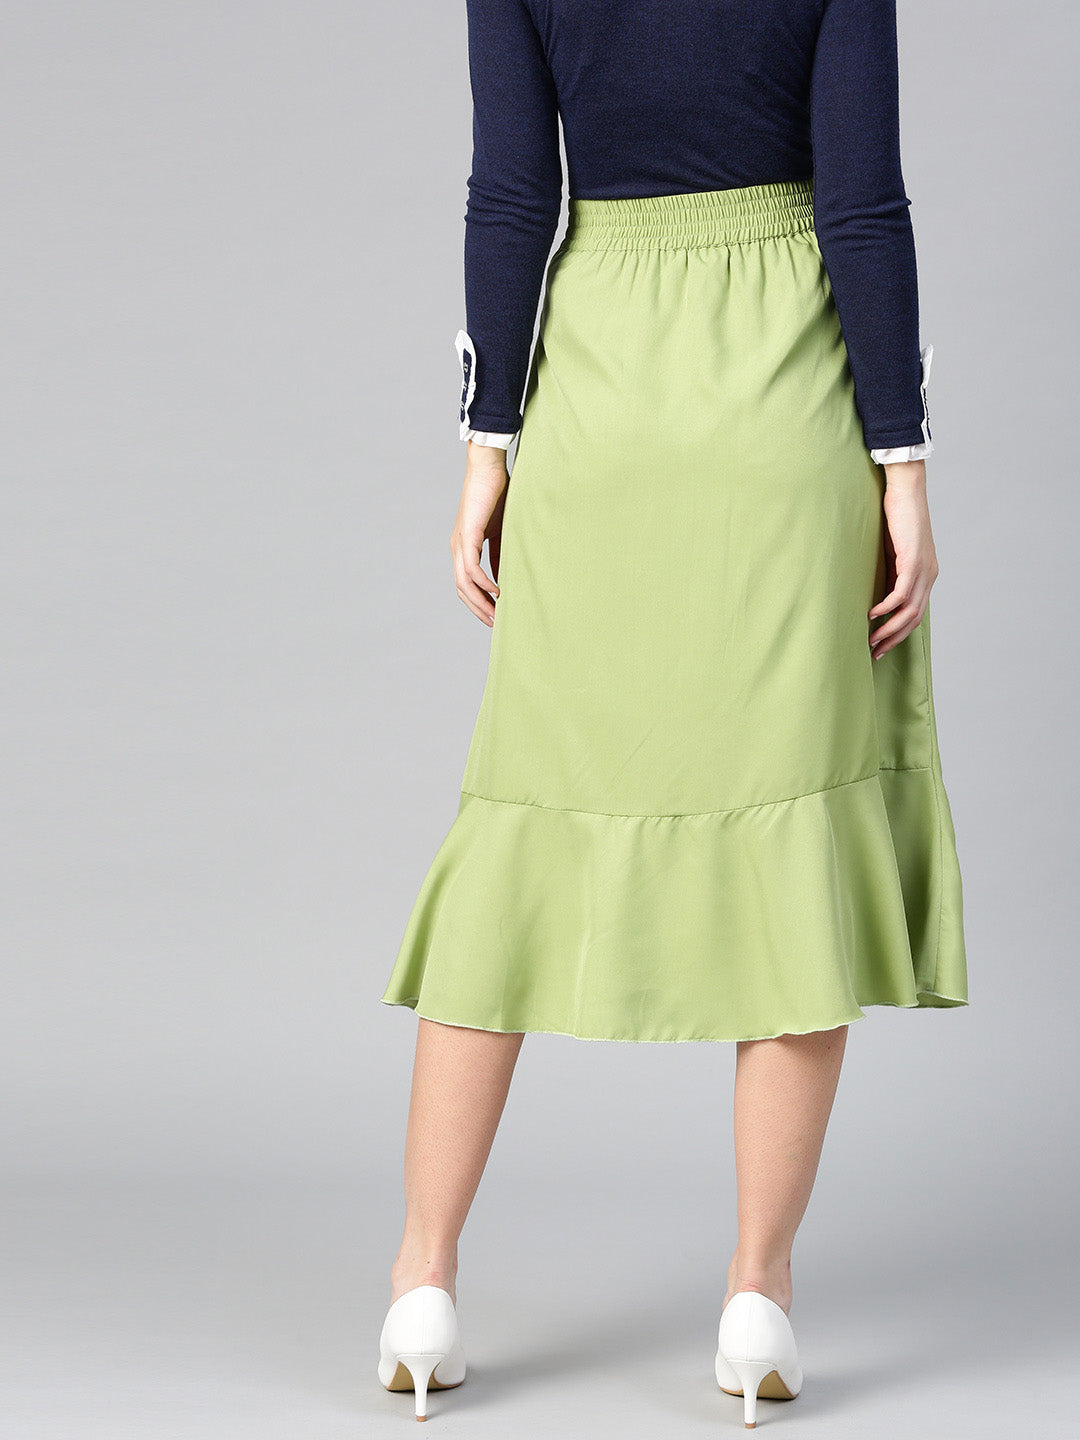 Green A Line With Front Slit Skirt (Sku-BLMG12812).